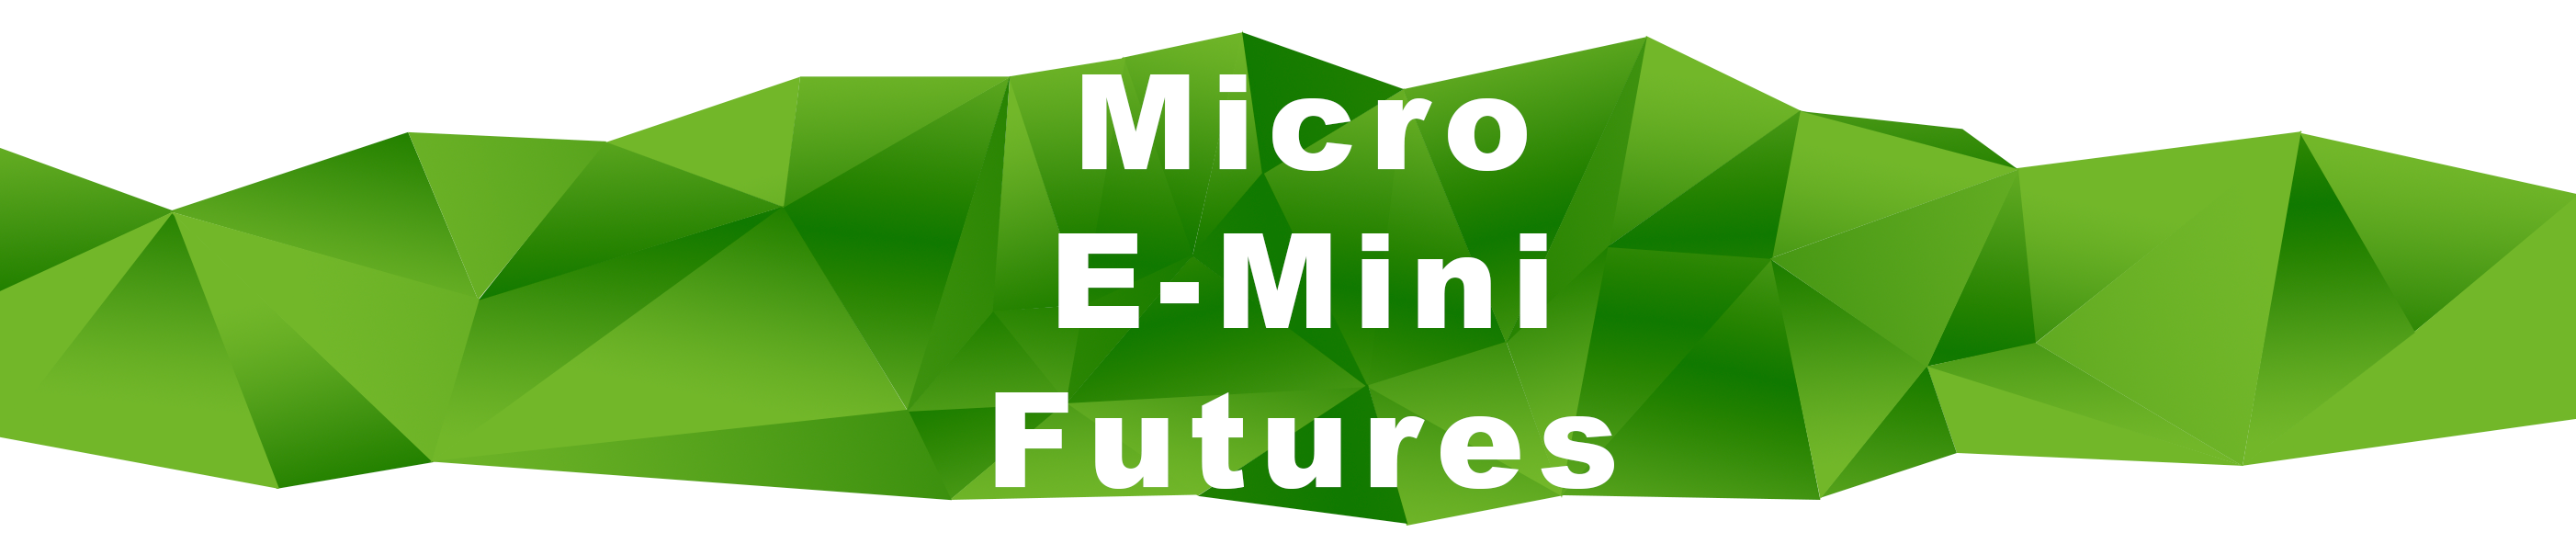 Micro E-Mini Futures FAQs - Ironbeam Futures